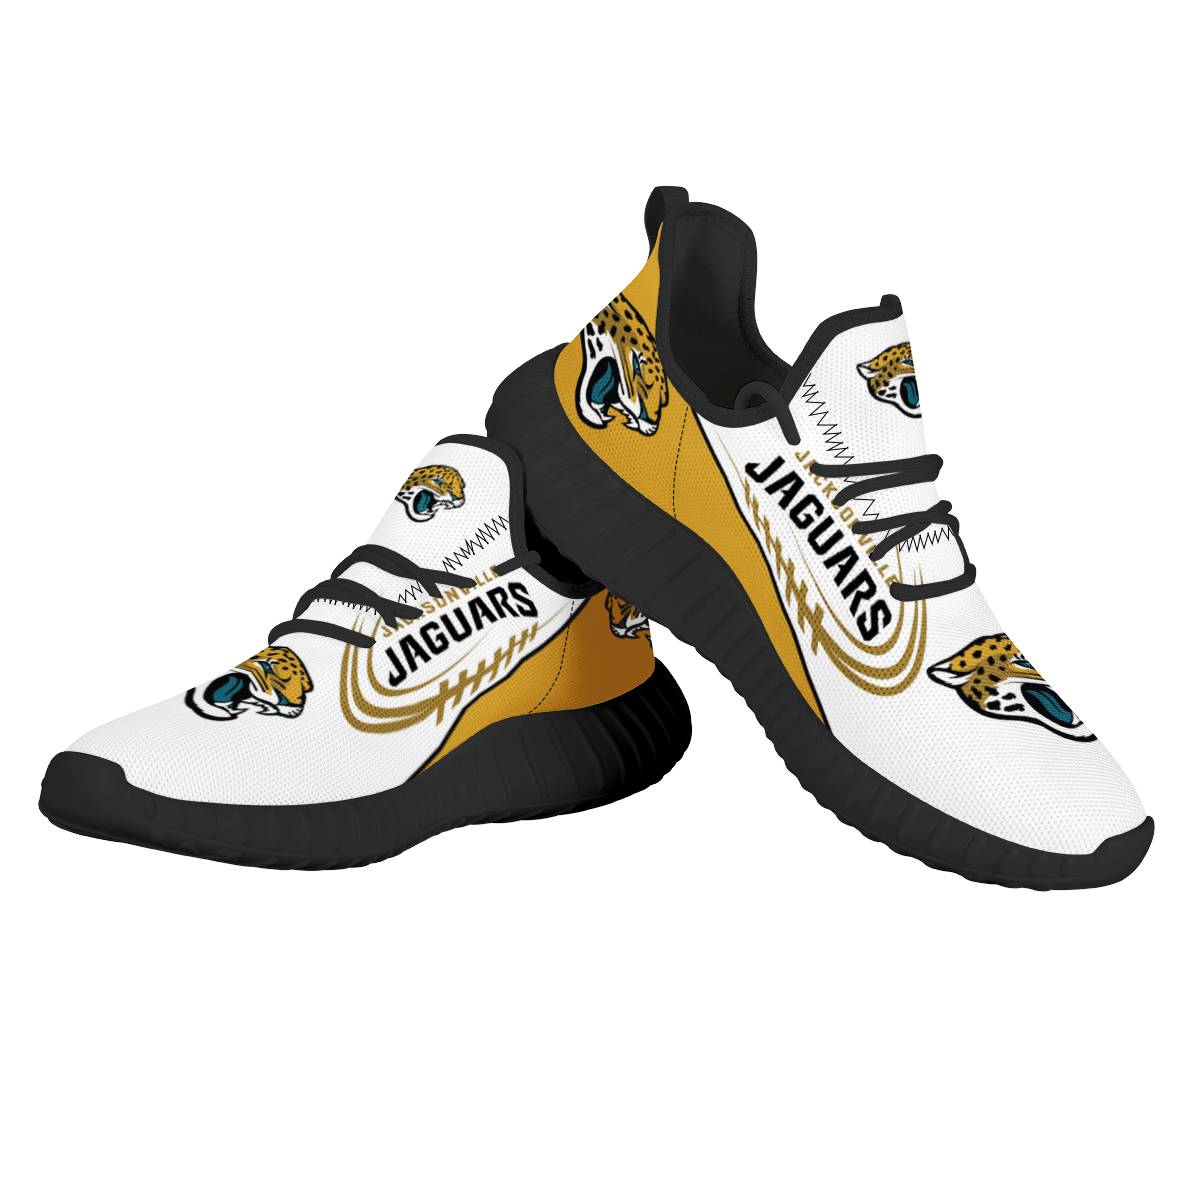 Men's NFL Jacksonville Jaguars Mesh Knit Sneakers/Shoes 001